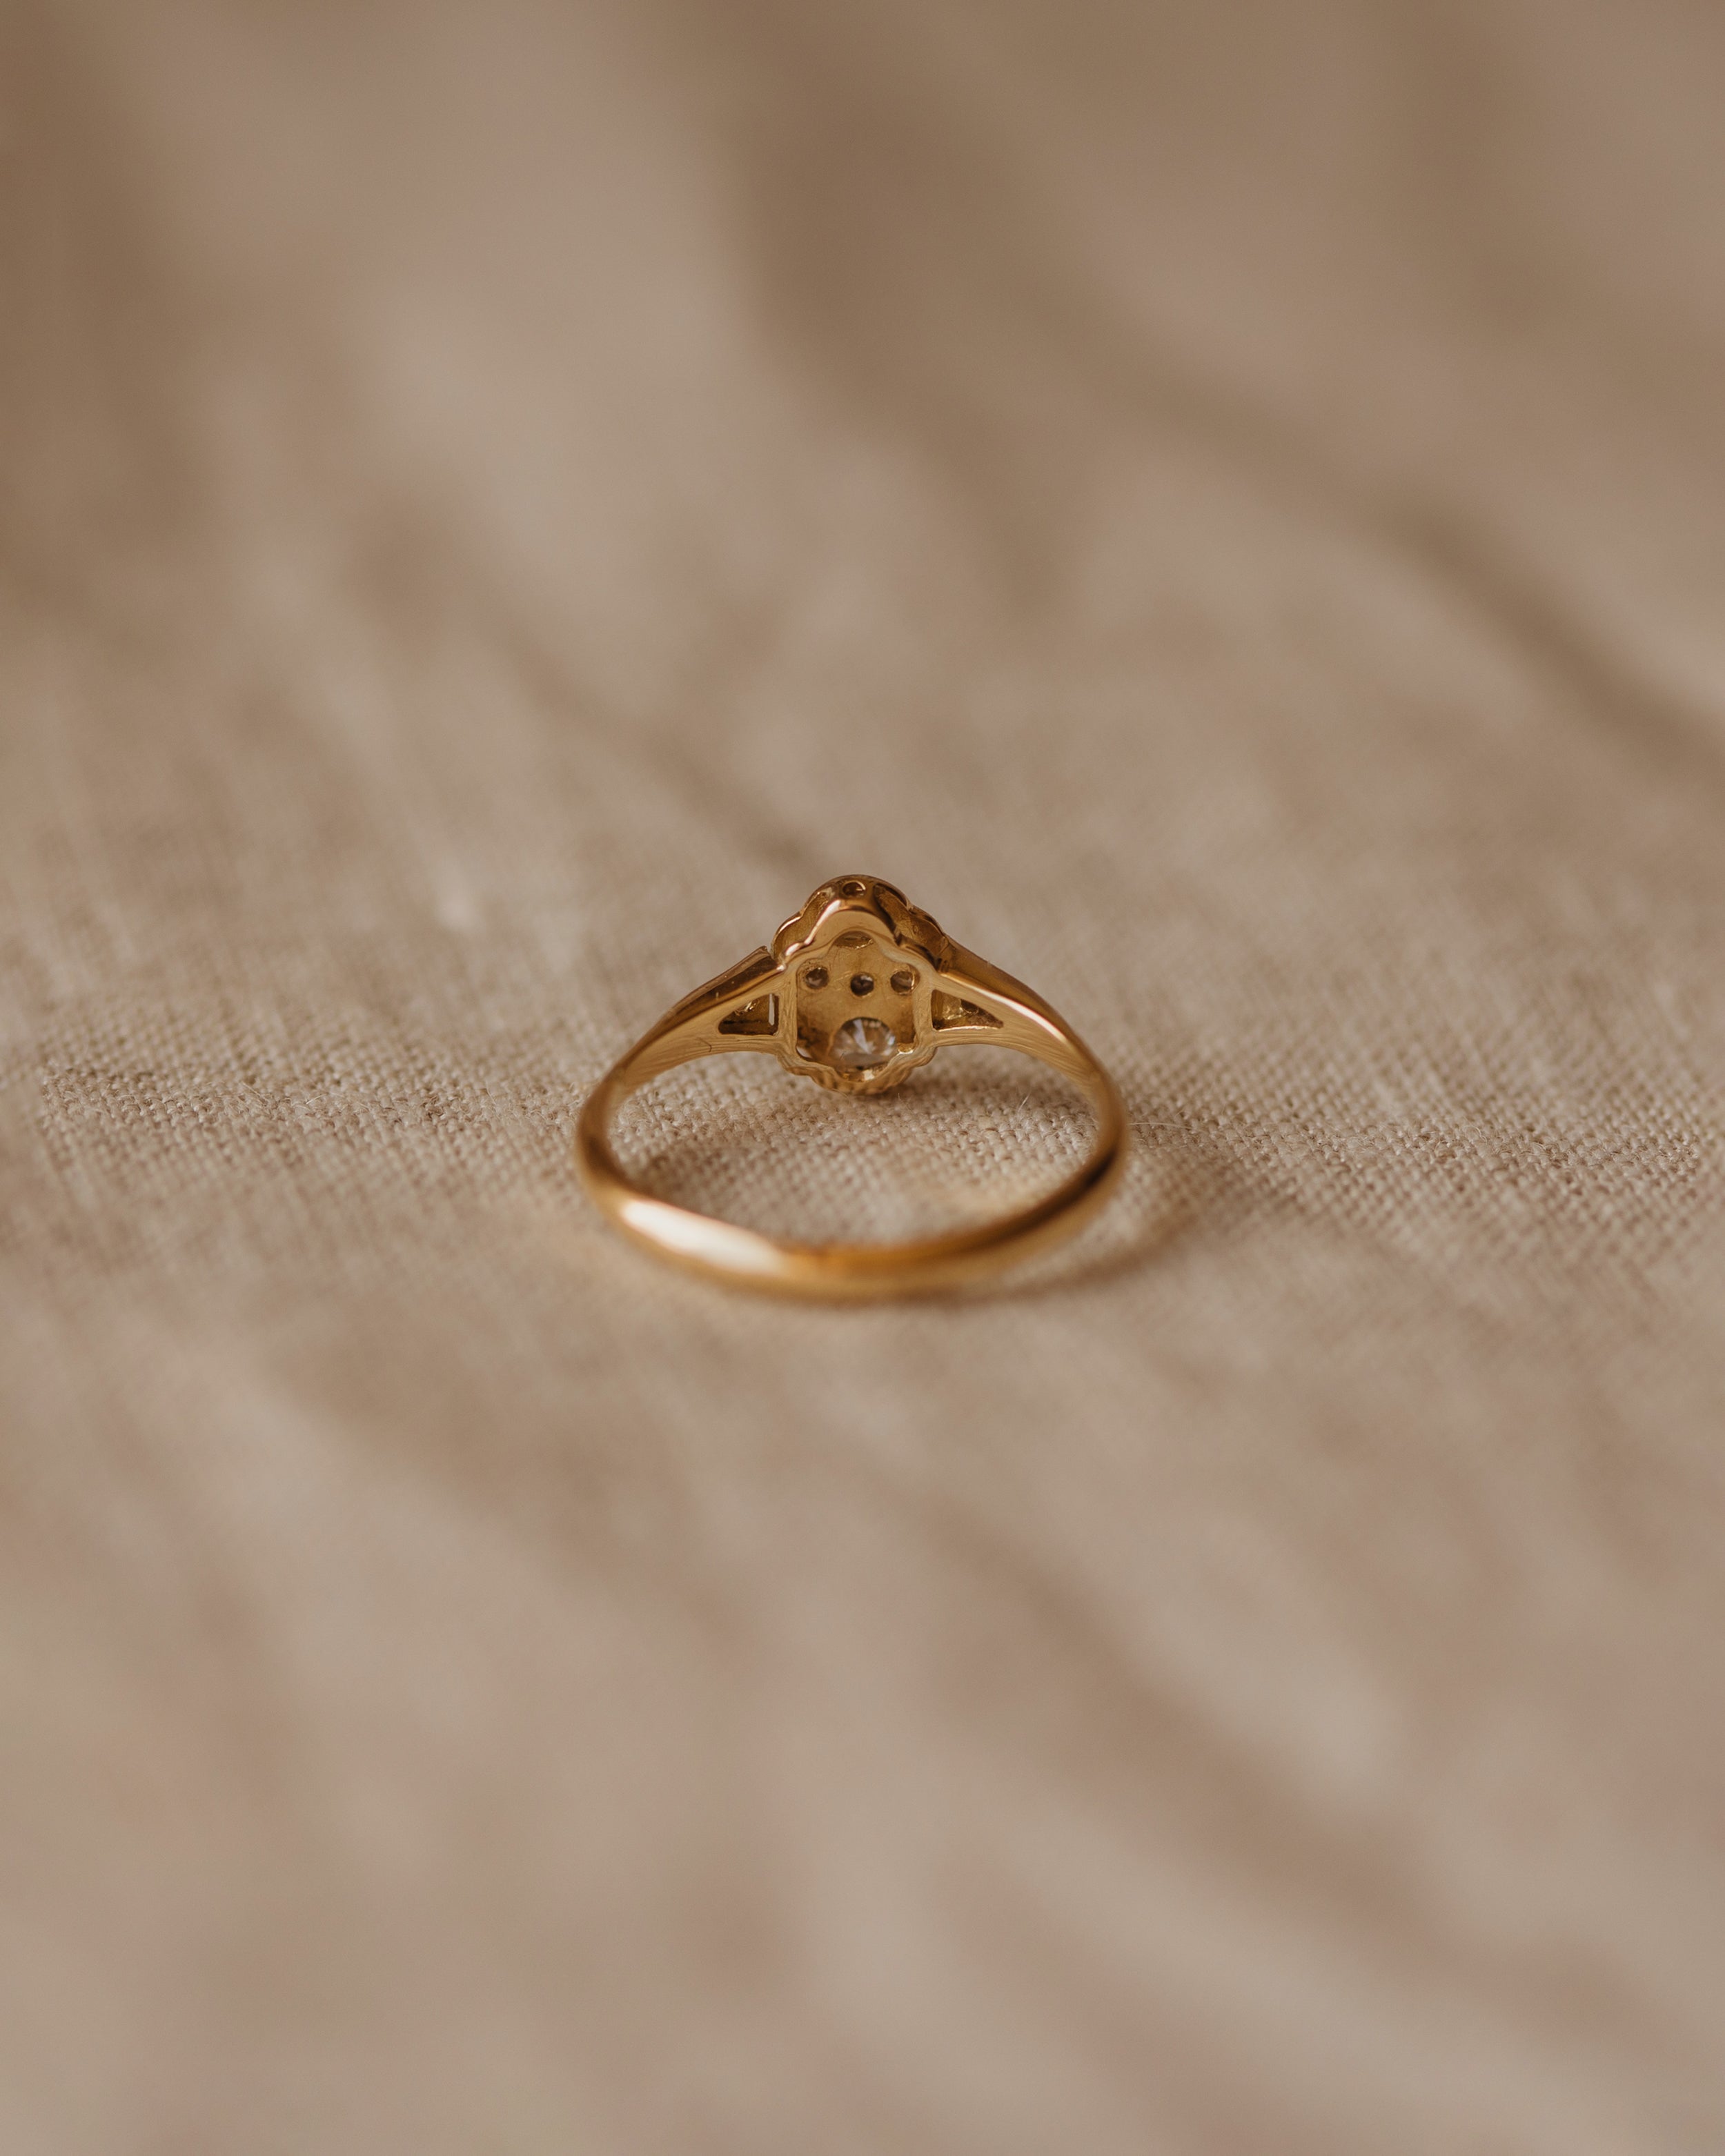 Charlotte Antique 18ct Gold Diamond Ring